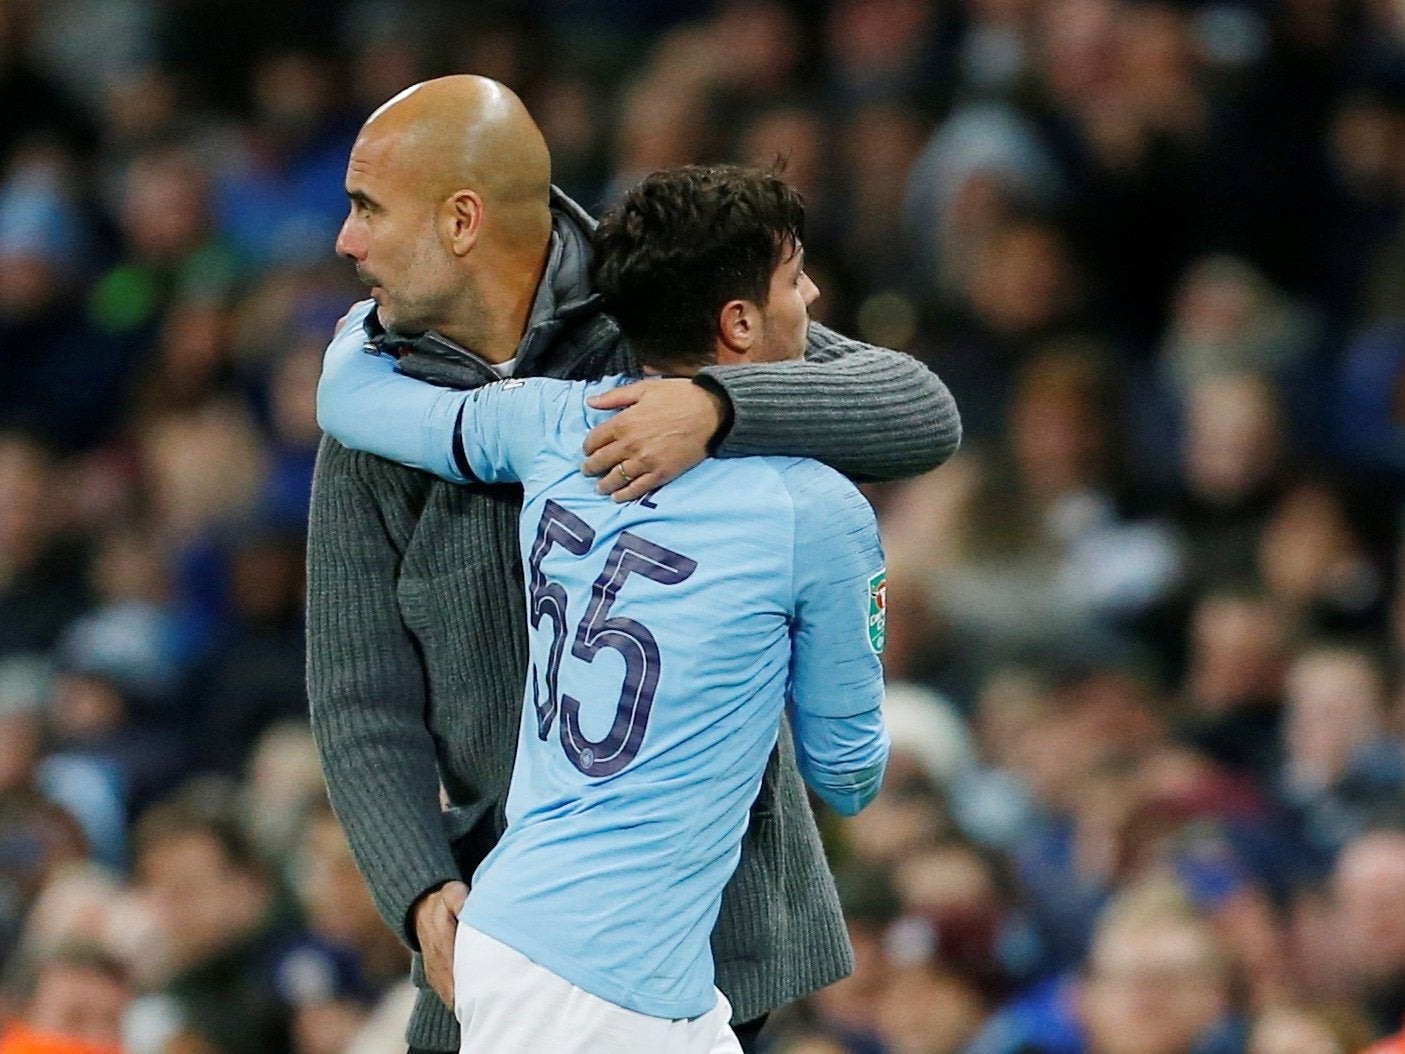 Pep Guardiola embraces Brahim Diaz, who is set to leave City